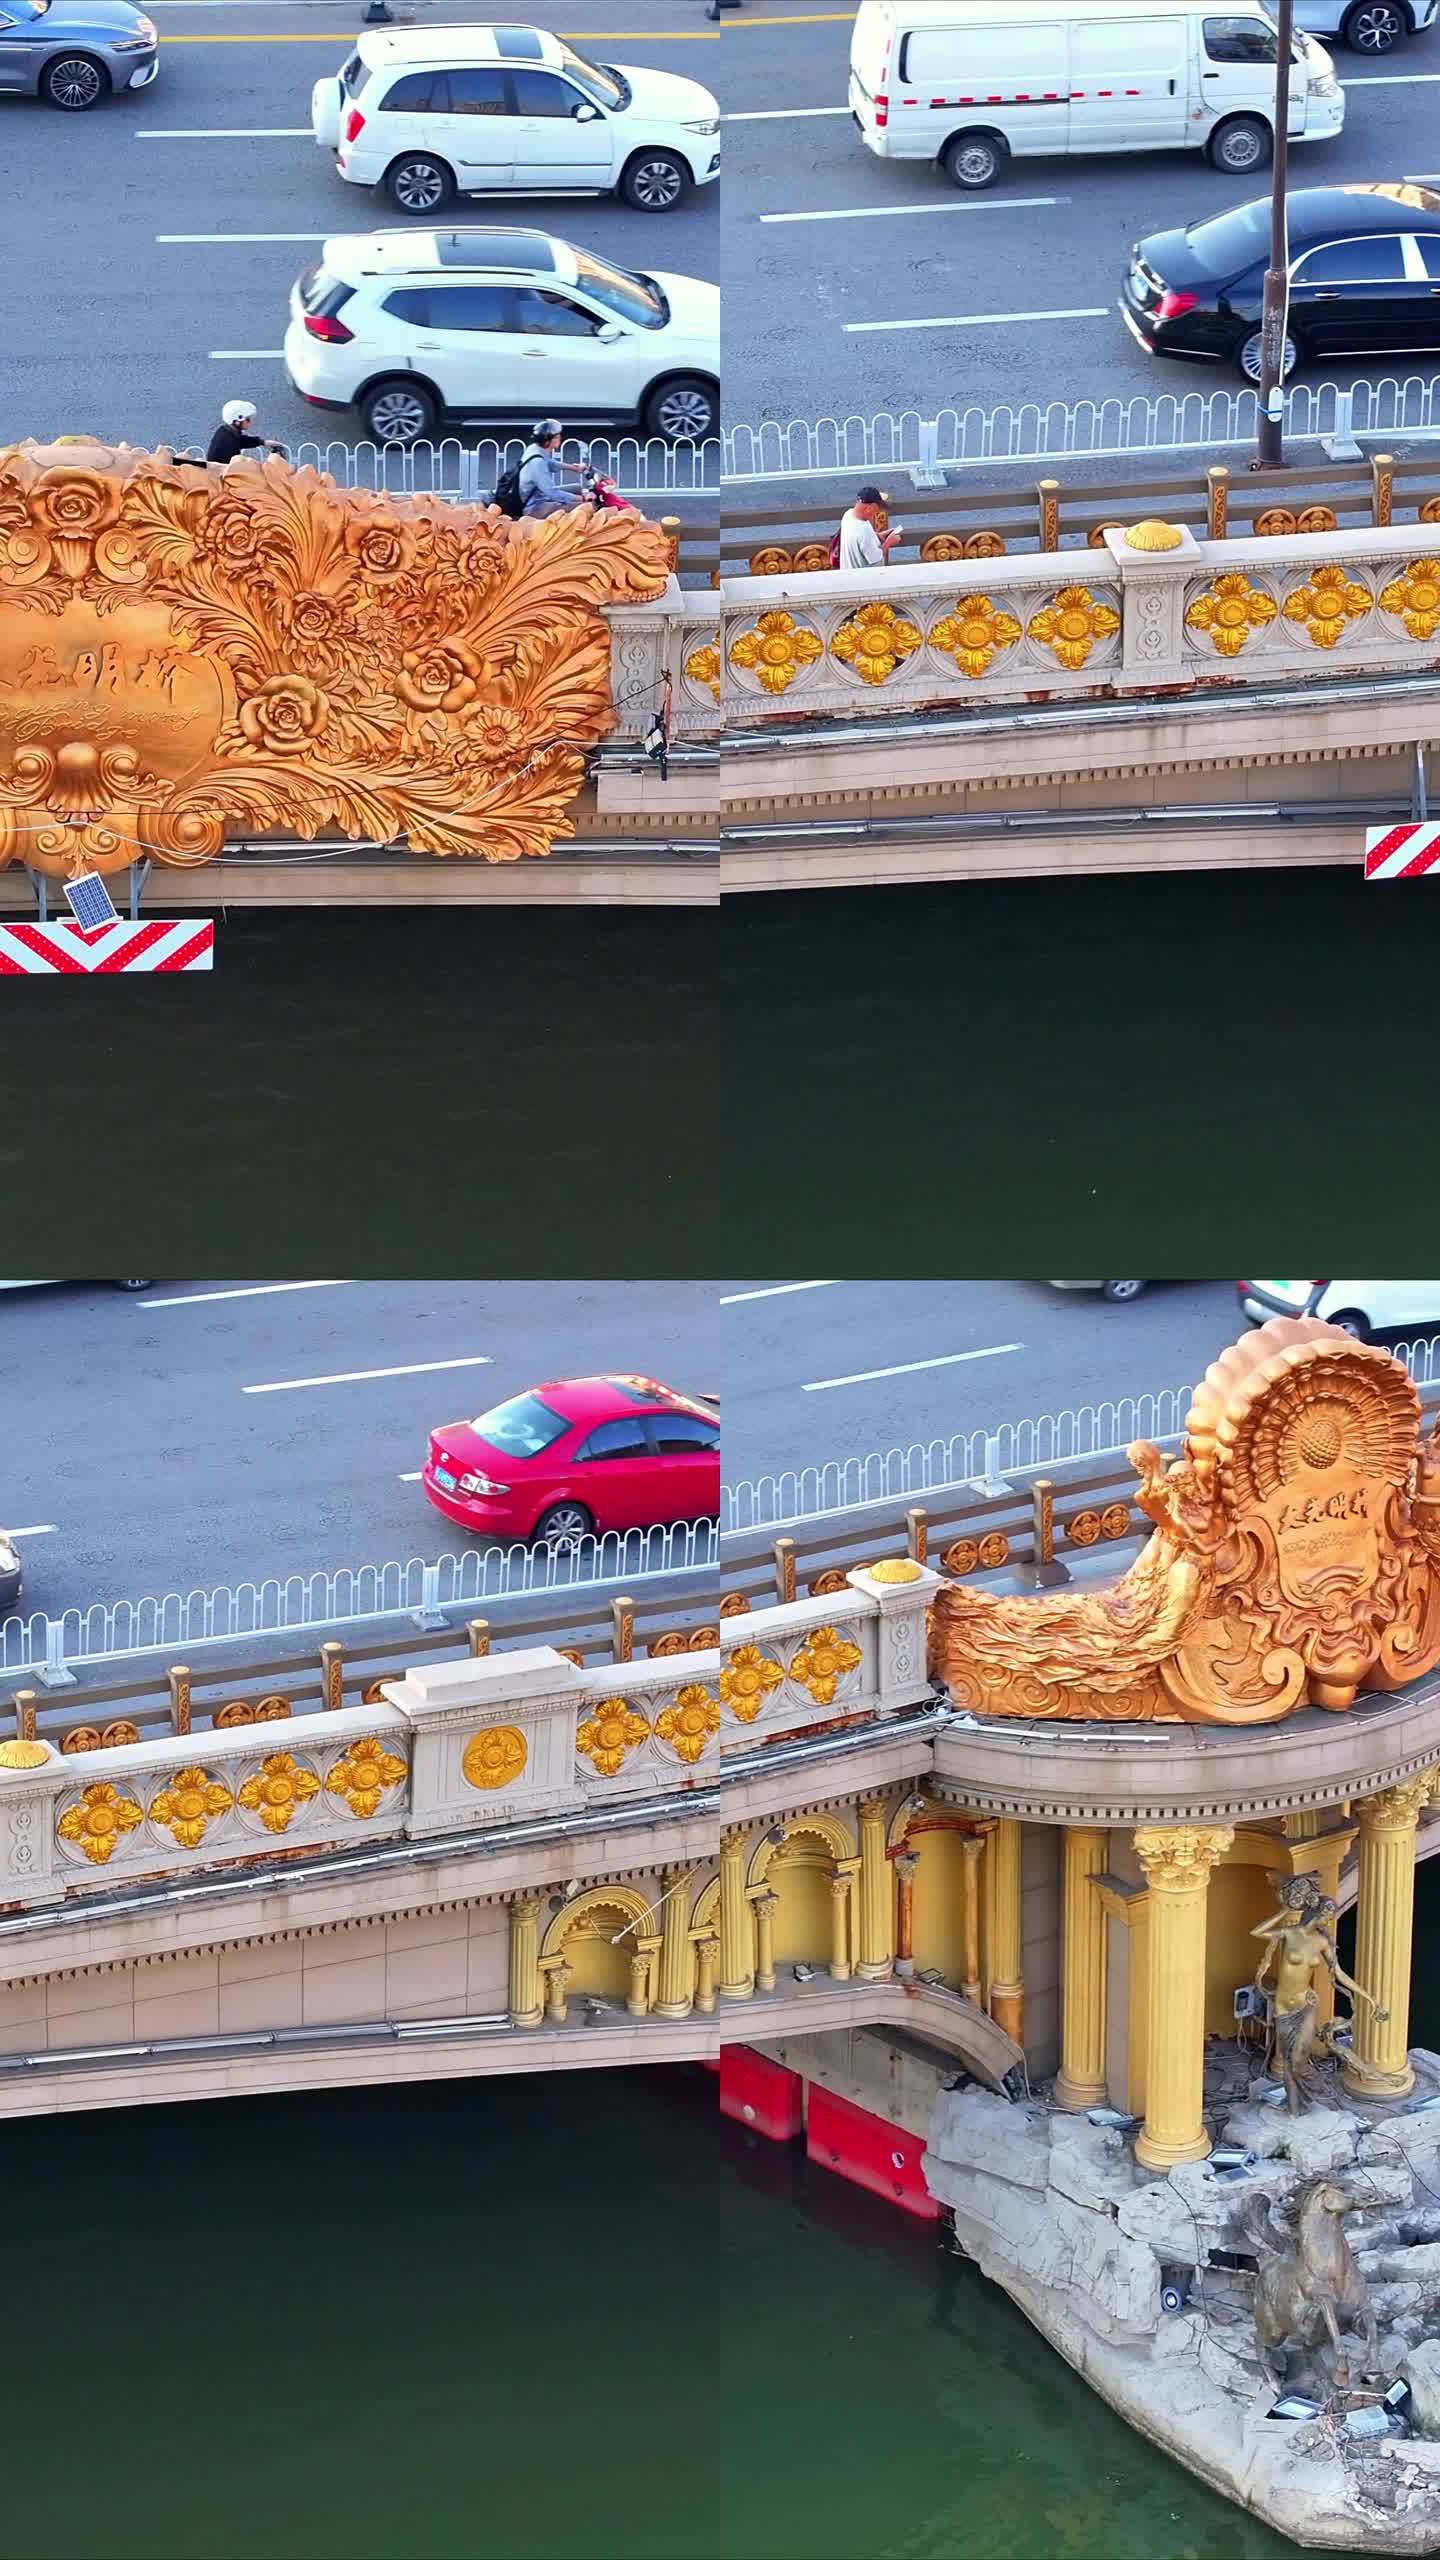 天津大光明桥高清视频